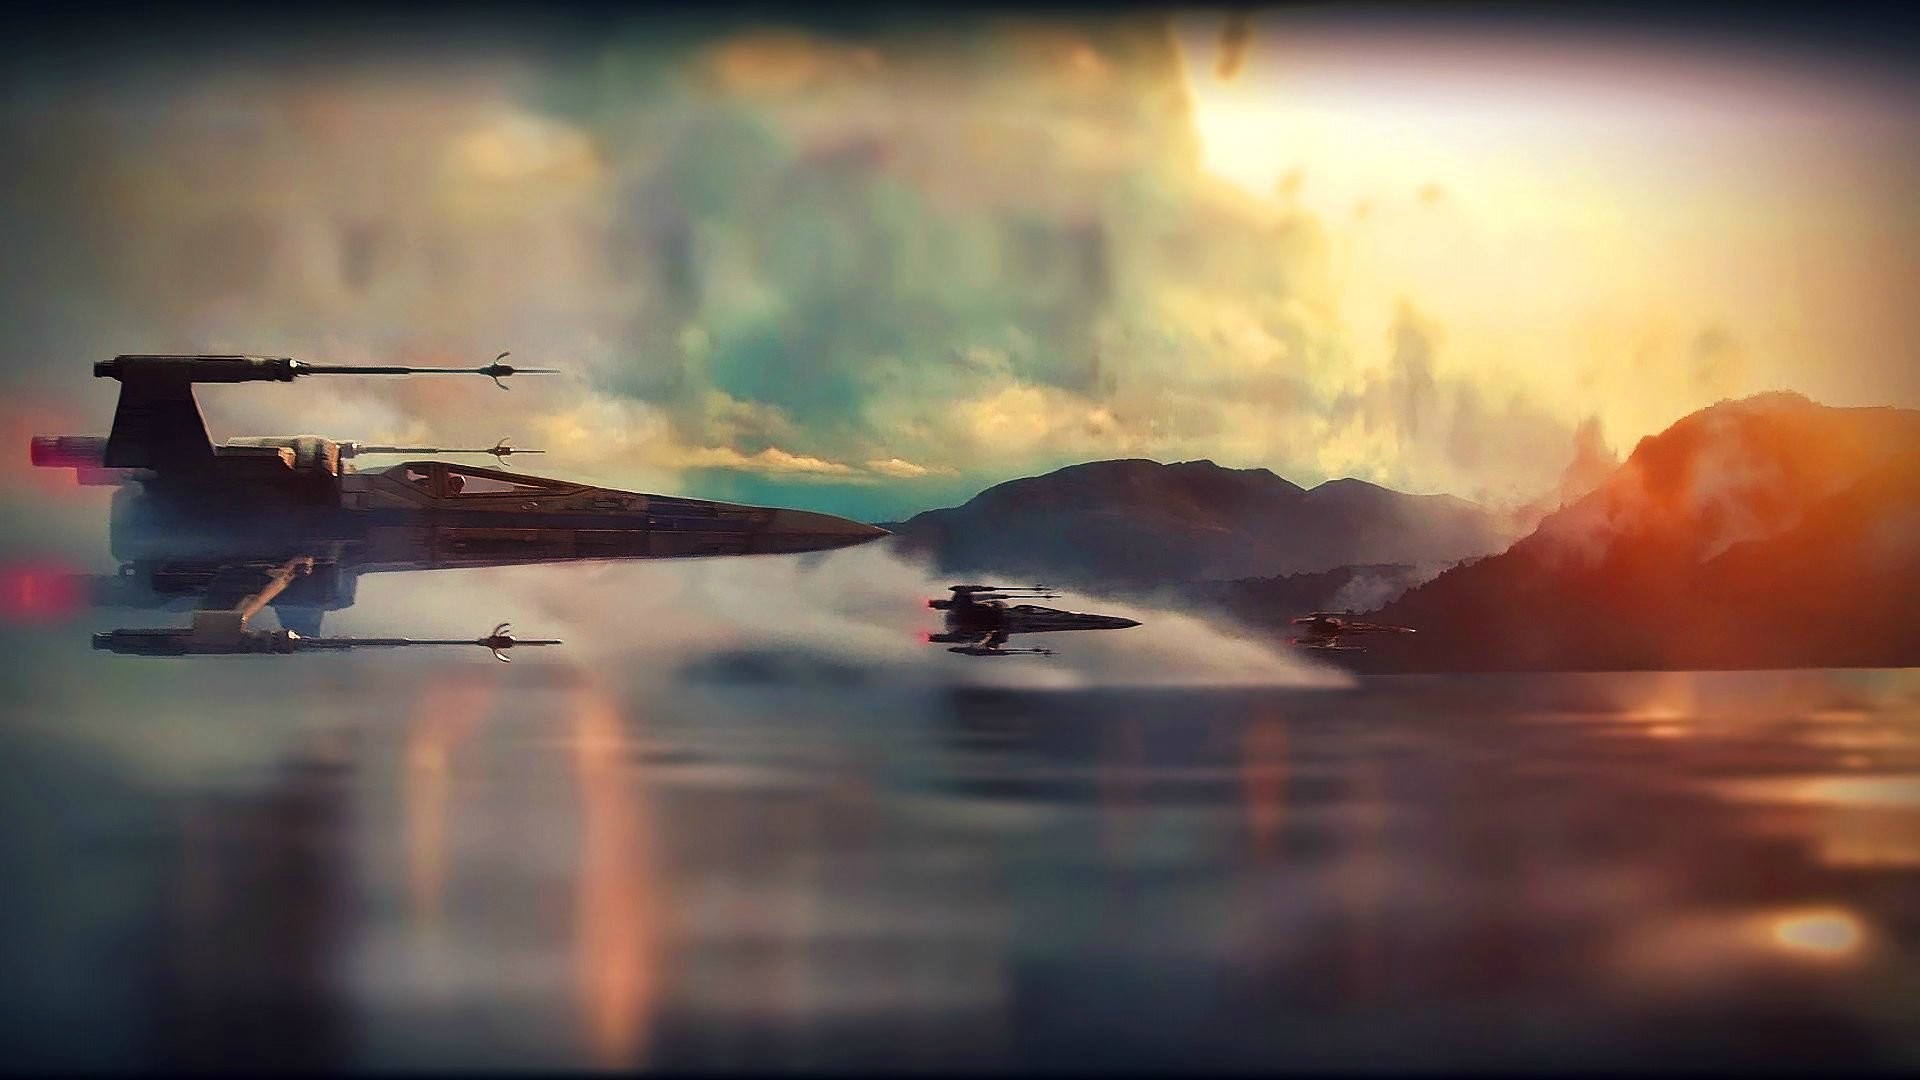 HD Wallpaper Background ID559859. Movie Star Wars Episode VII The Force Awakens. 62 Like. Favorite